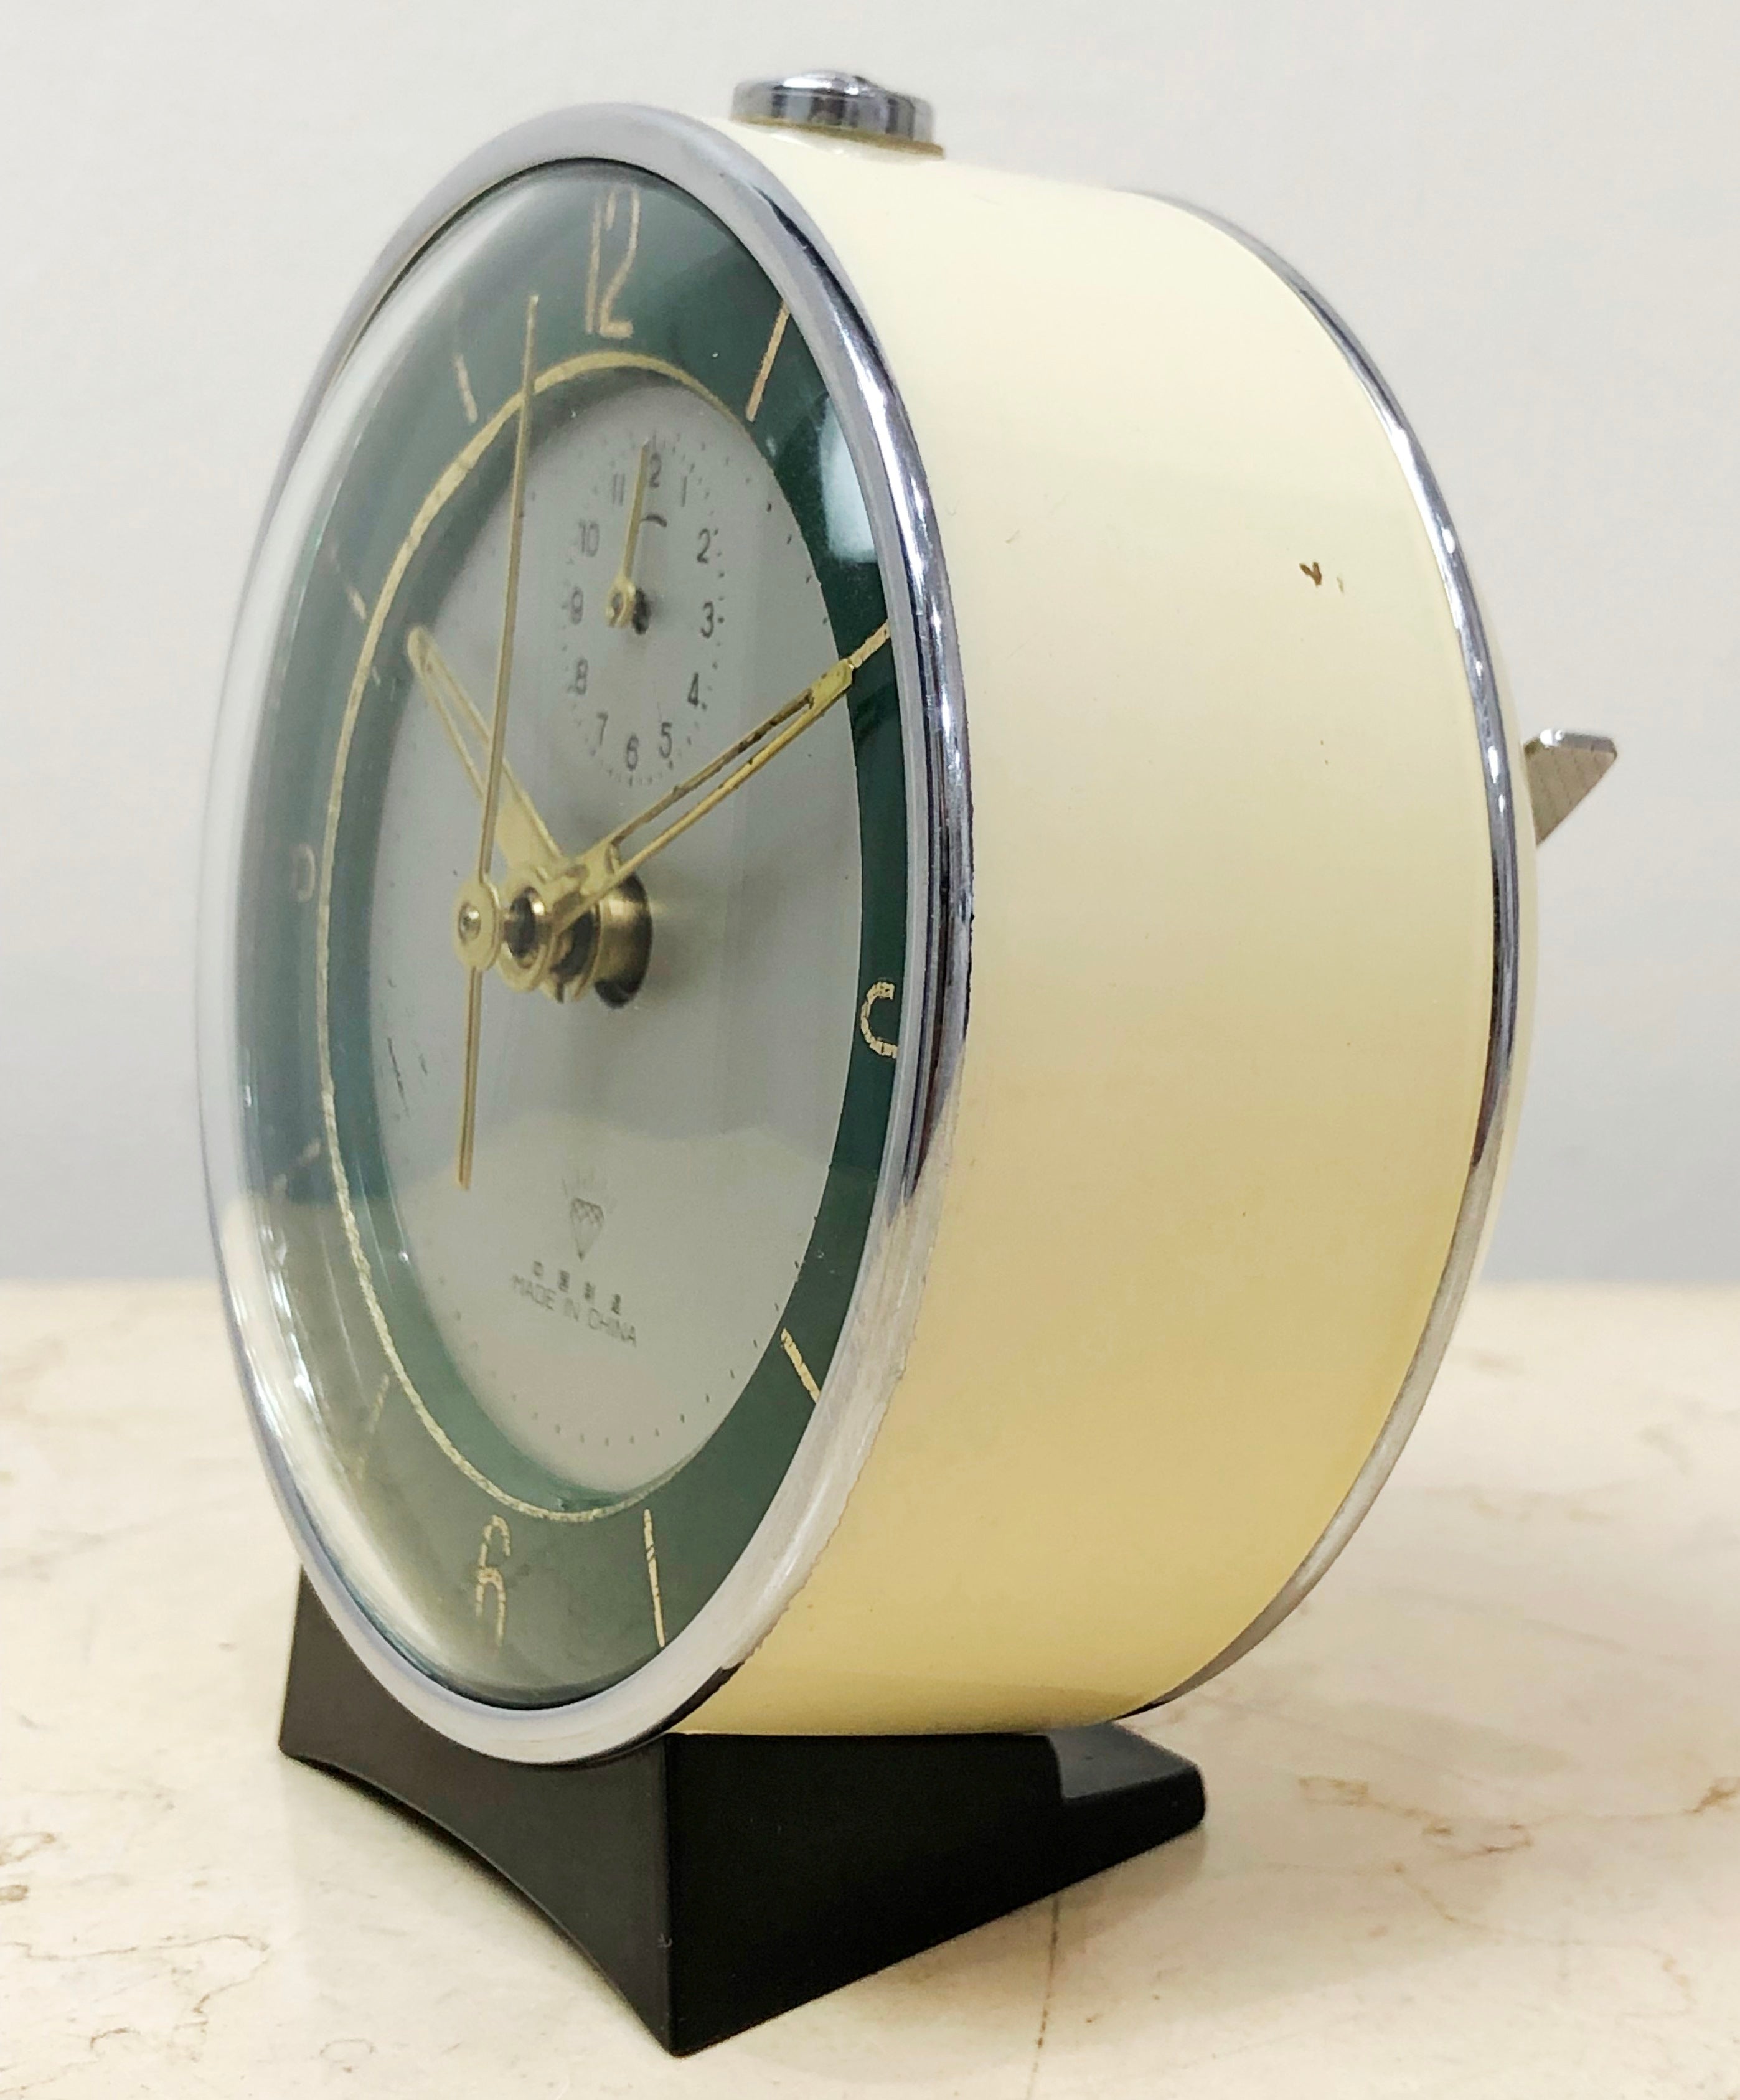 Vintage China Alarm Desk Clock | eXibit collection